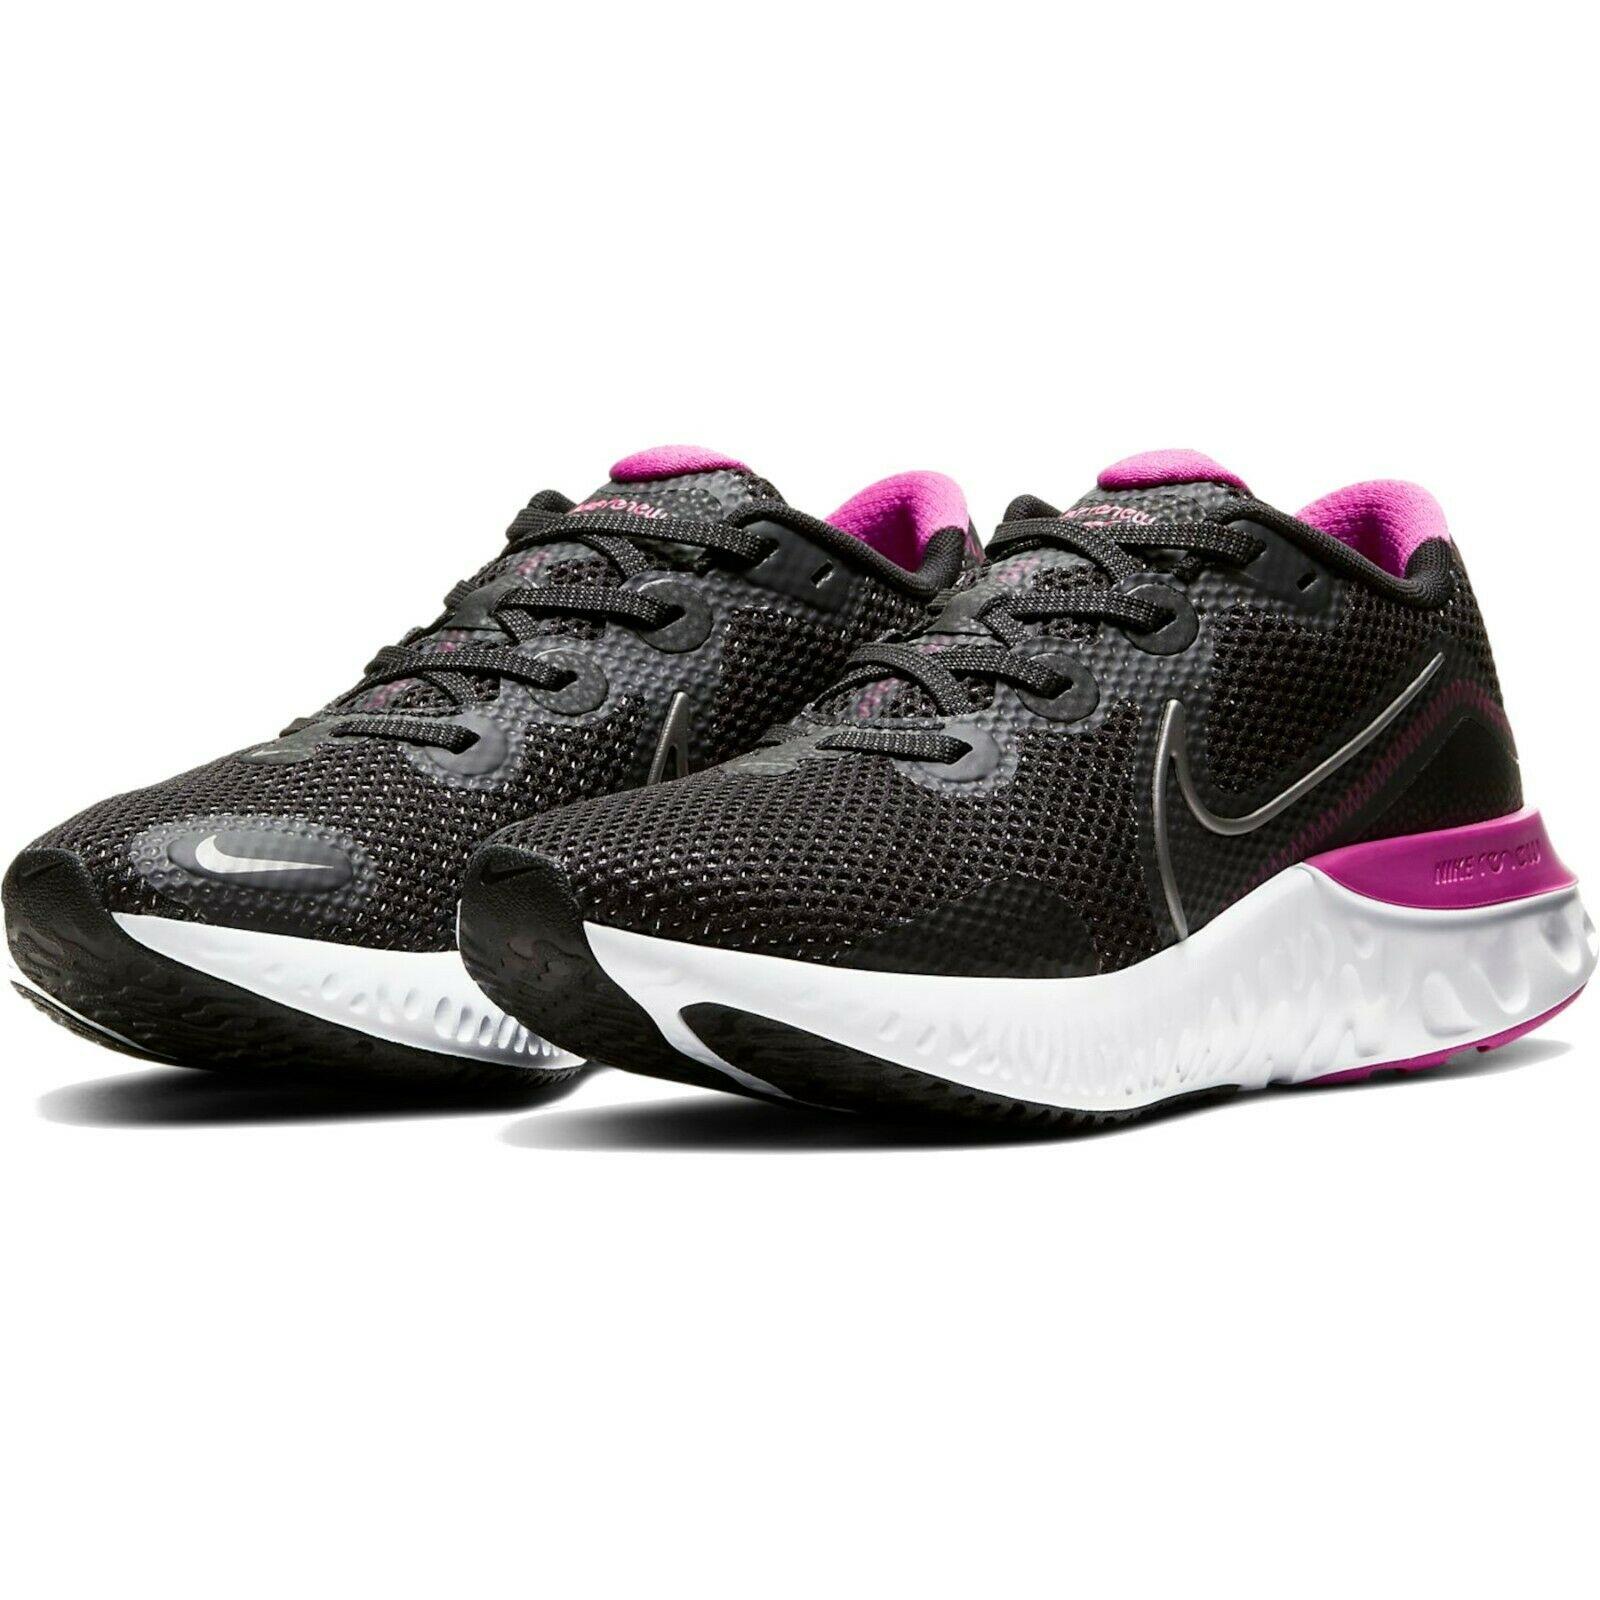 Nike Renew Run Womens Size 11.5 Sneakers Shoes CK6360 004 Multicol - Multicolor